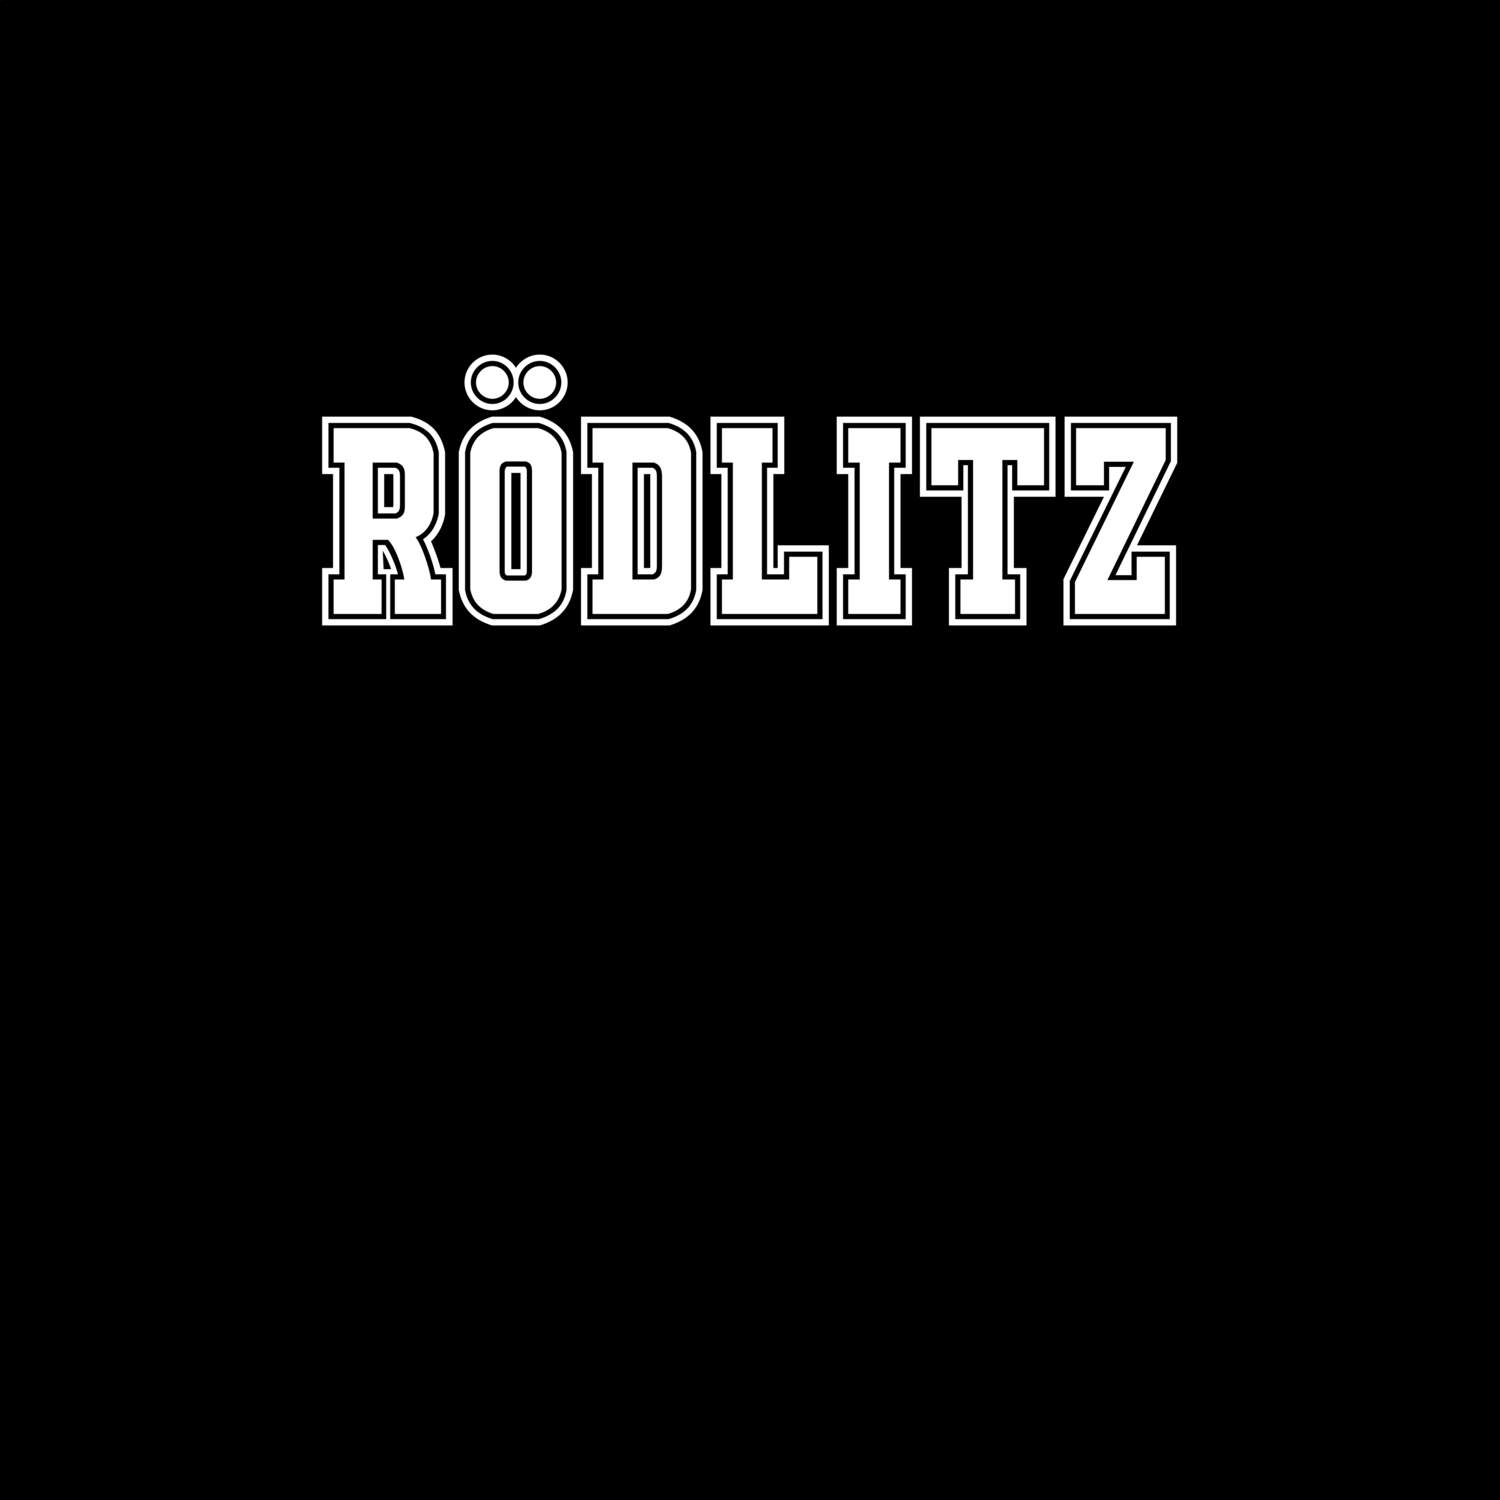 Rödlitz T-Shirt »Classic«